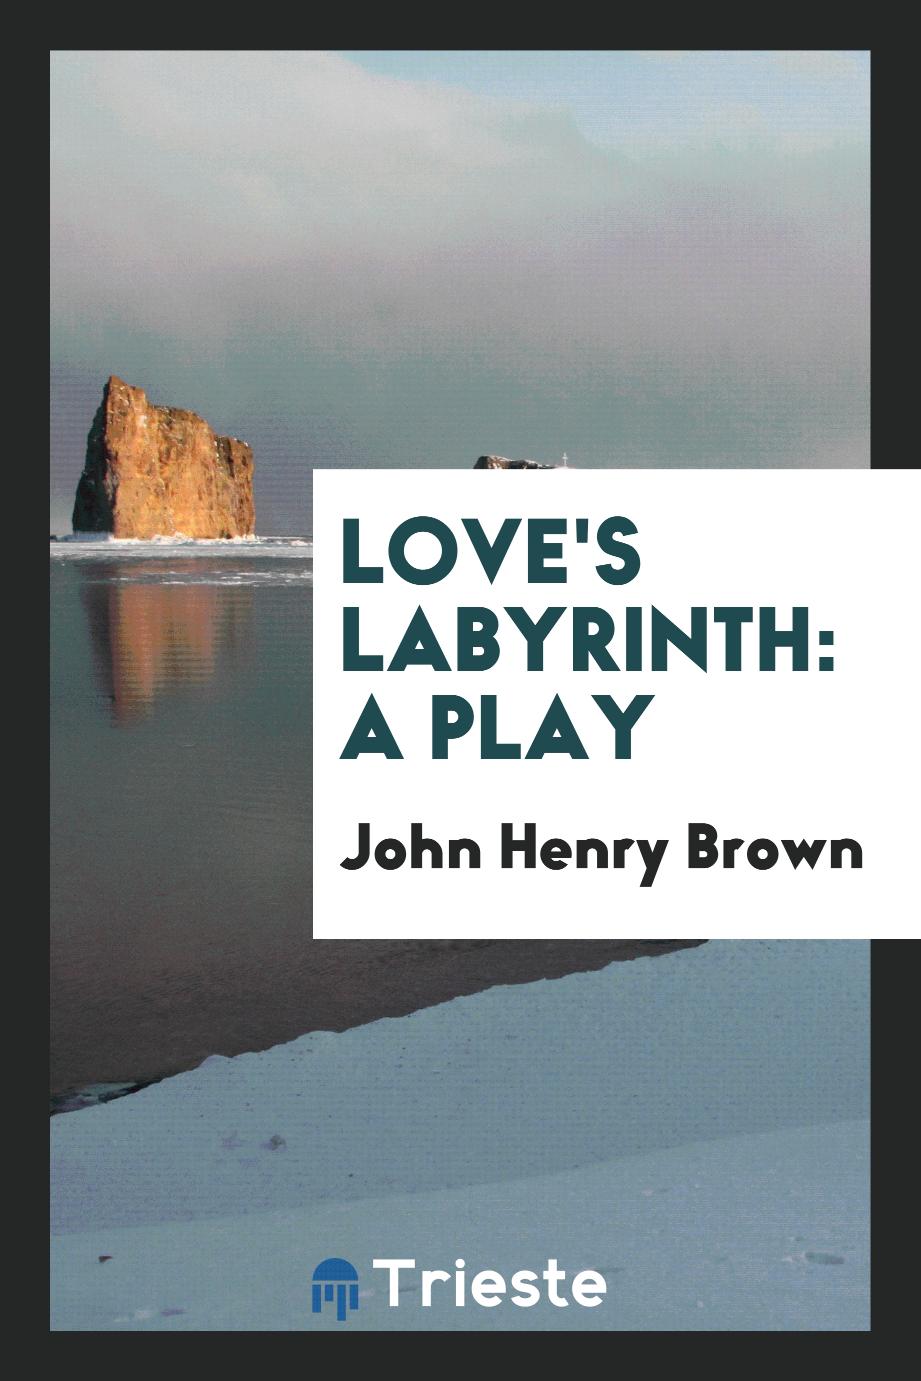 Love's Labyrinth: A Play